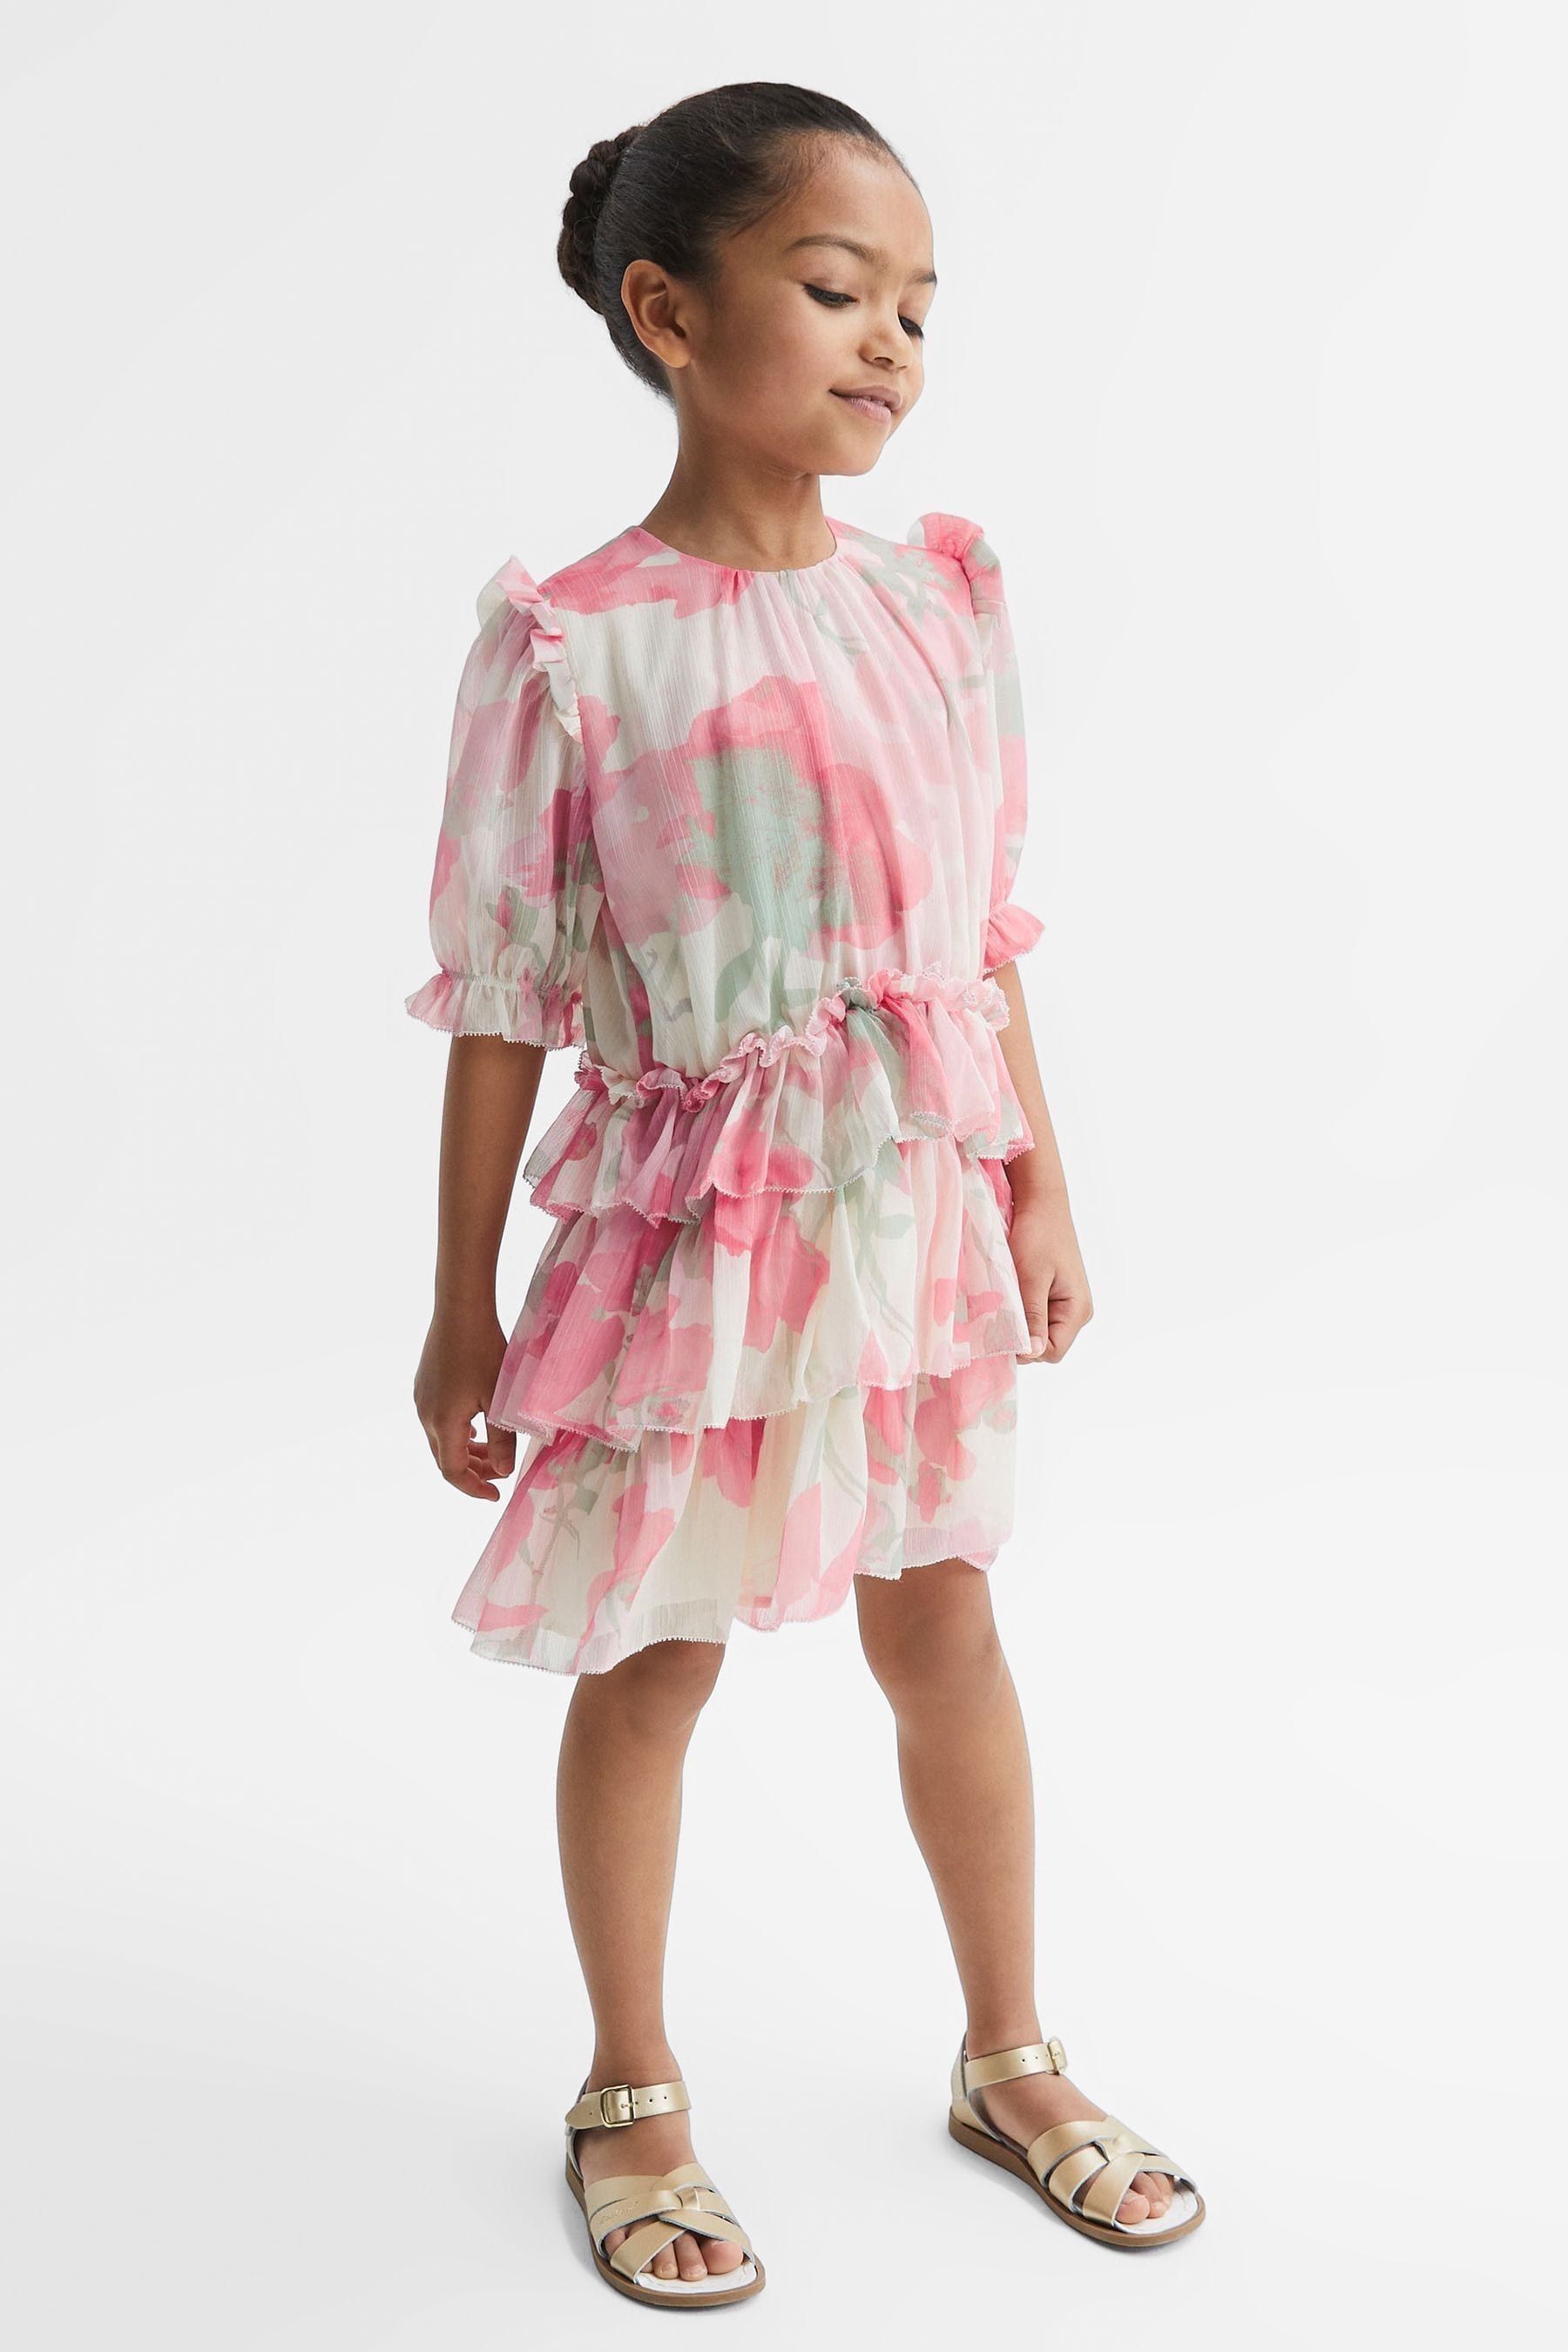 Reiss Henrietta - Pink Print Junior Printed Tiered Dress, Age 8-9 Years